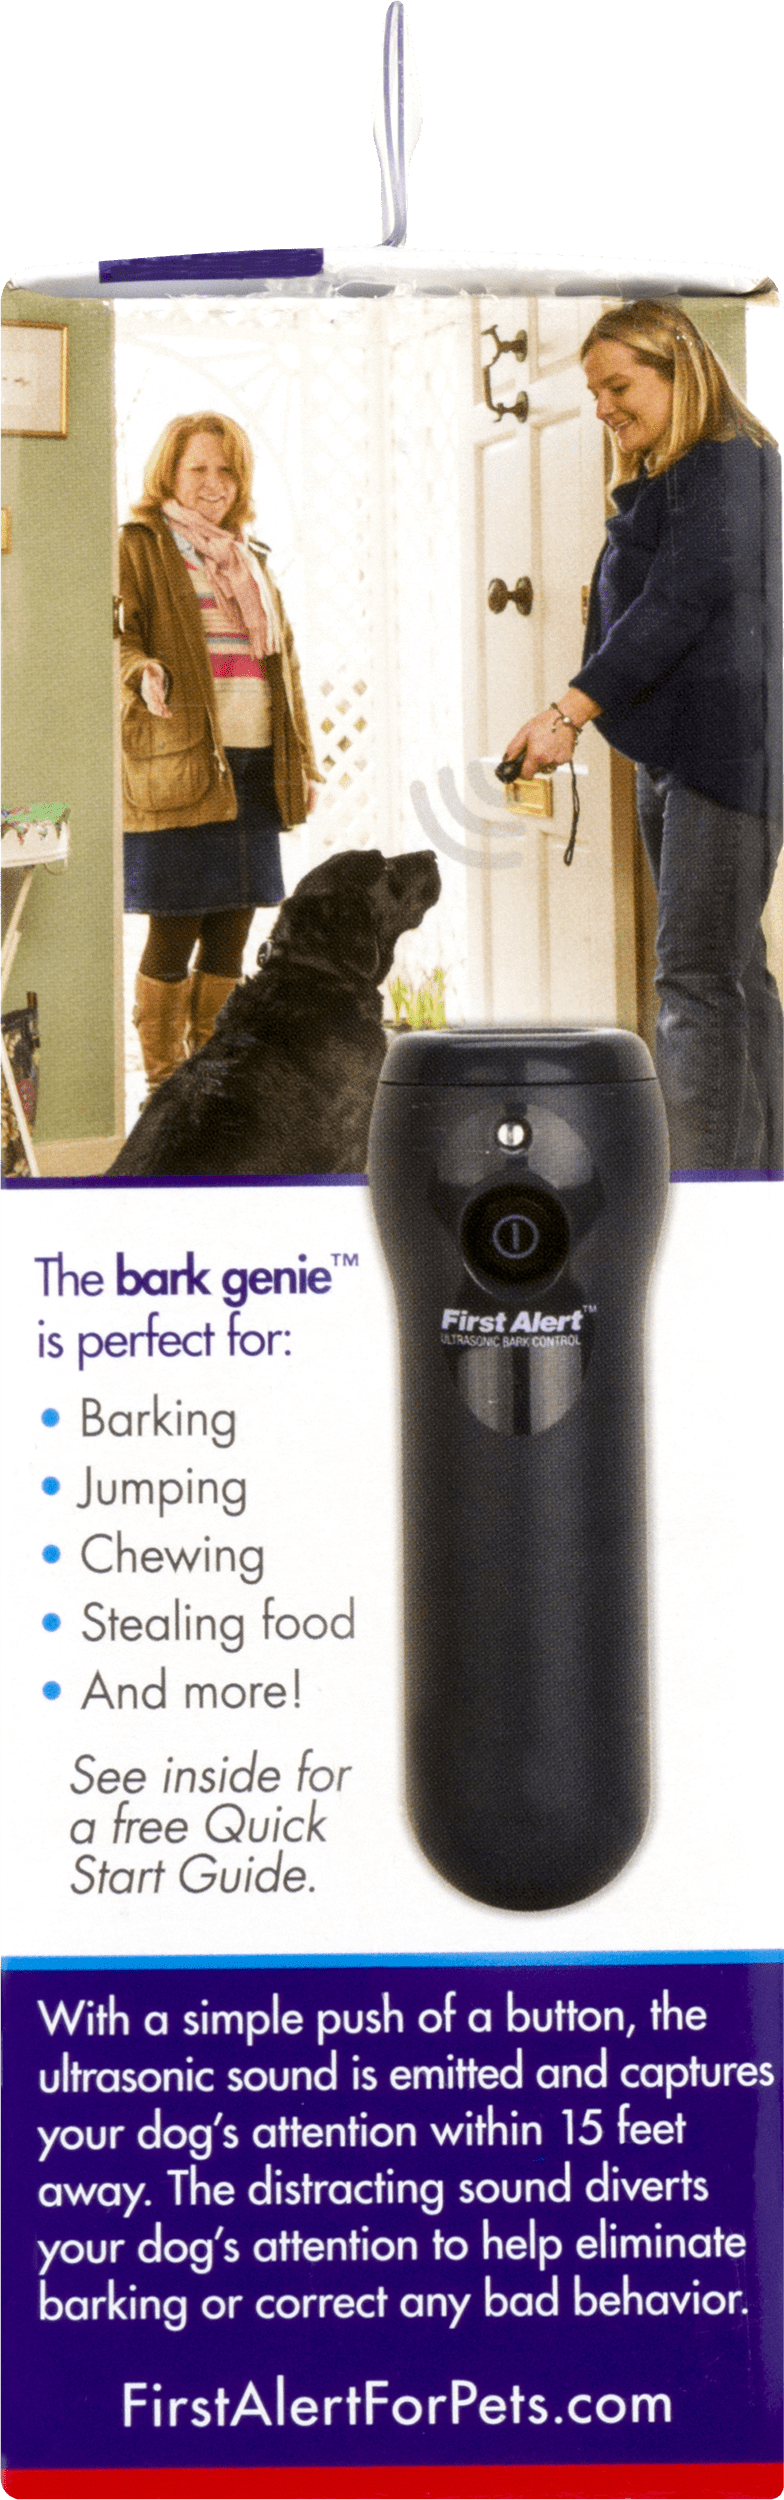 first alert bark genie handheld bark control